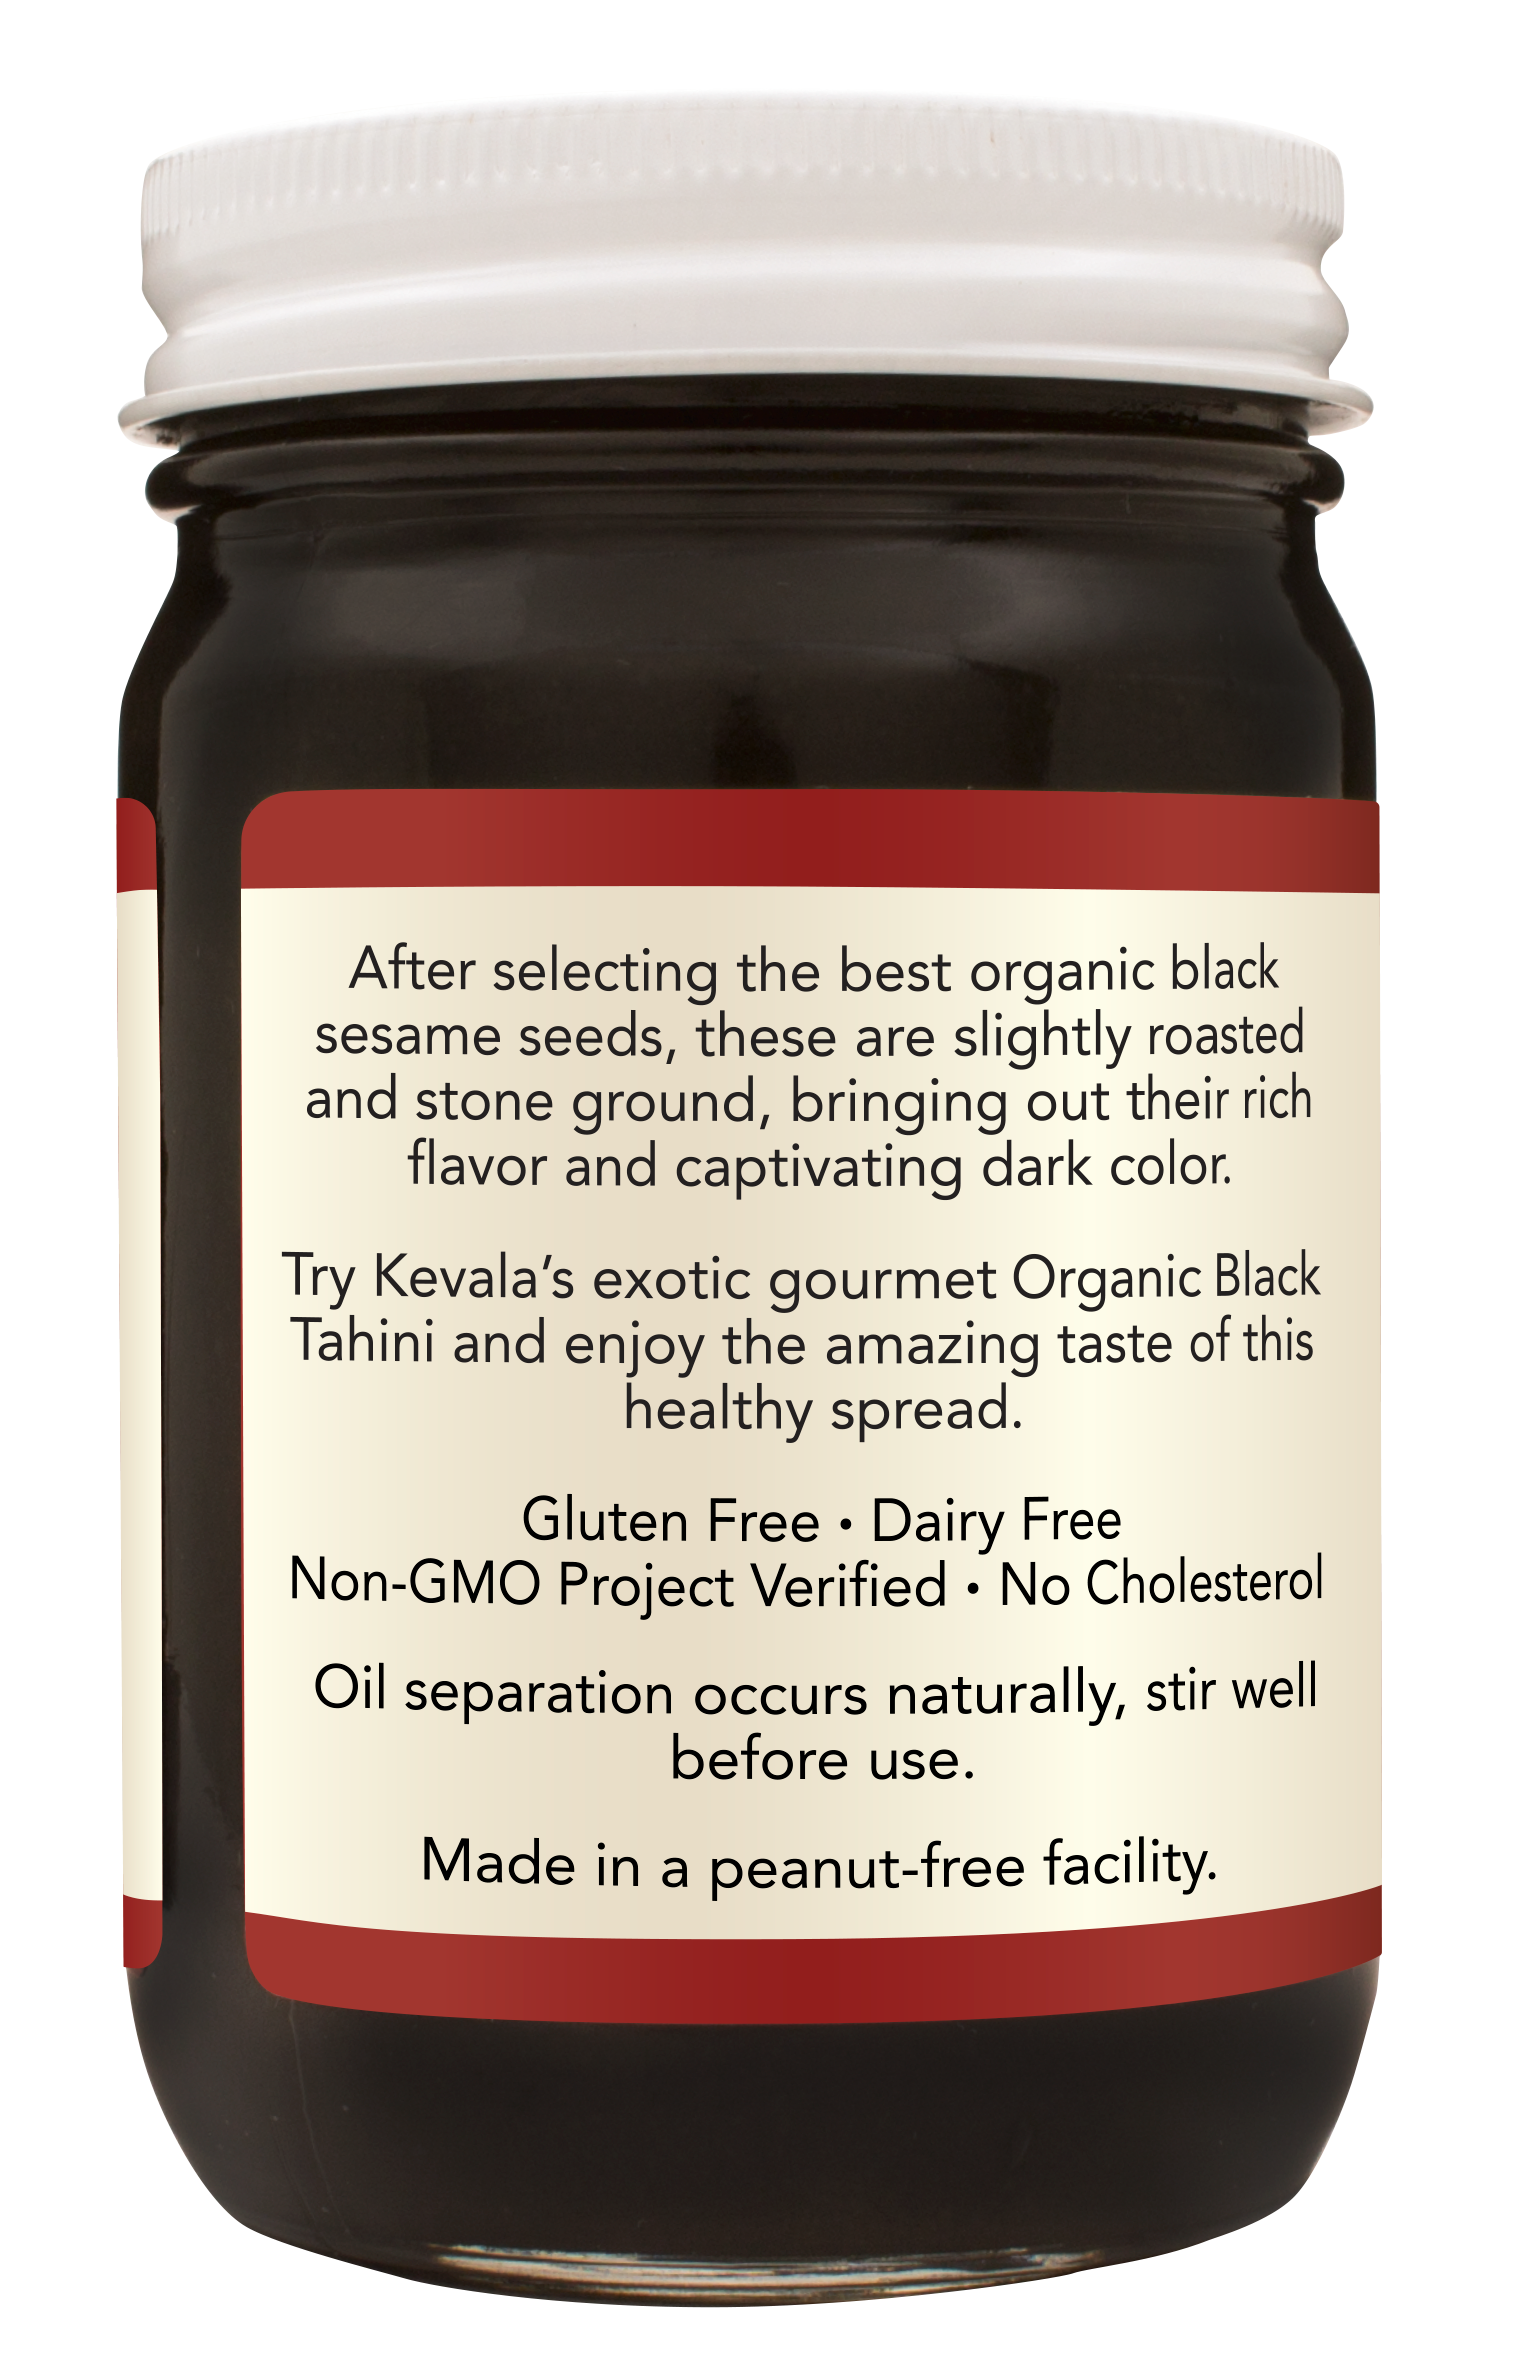 Kevala, Tahini Negro Orgánico, 340 g